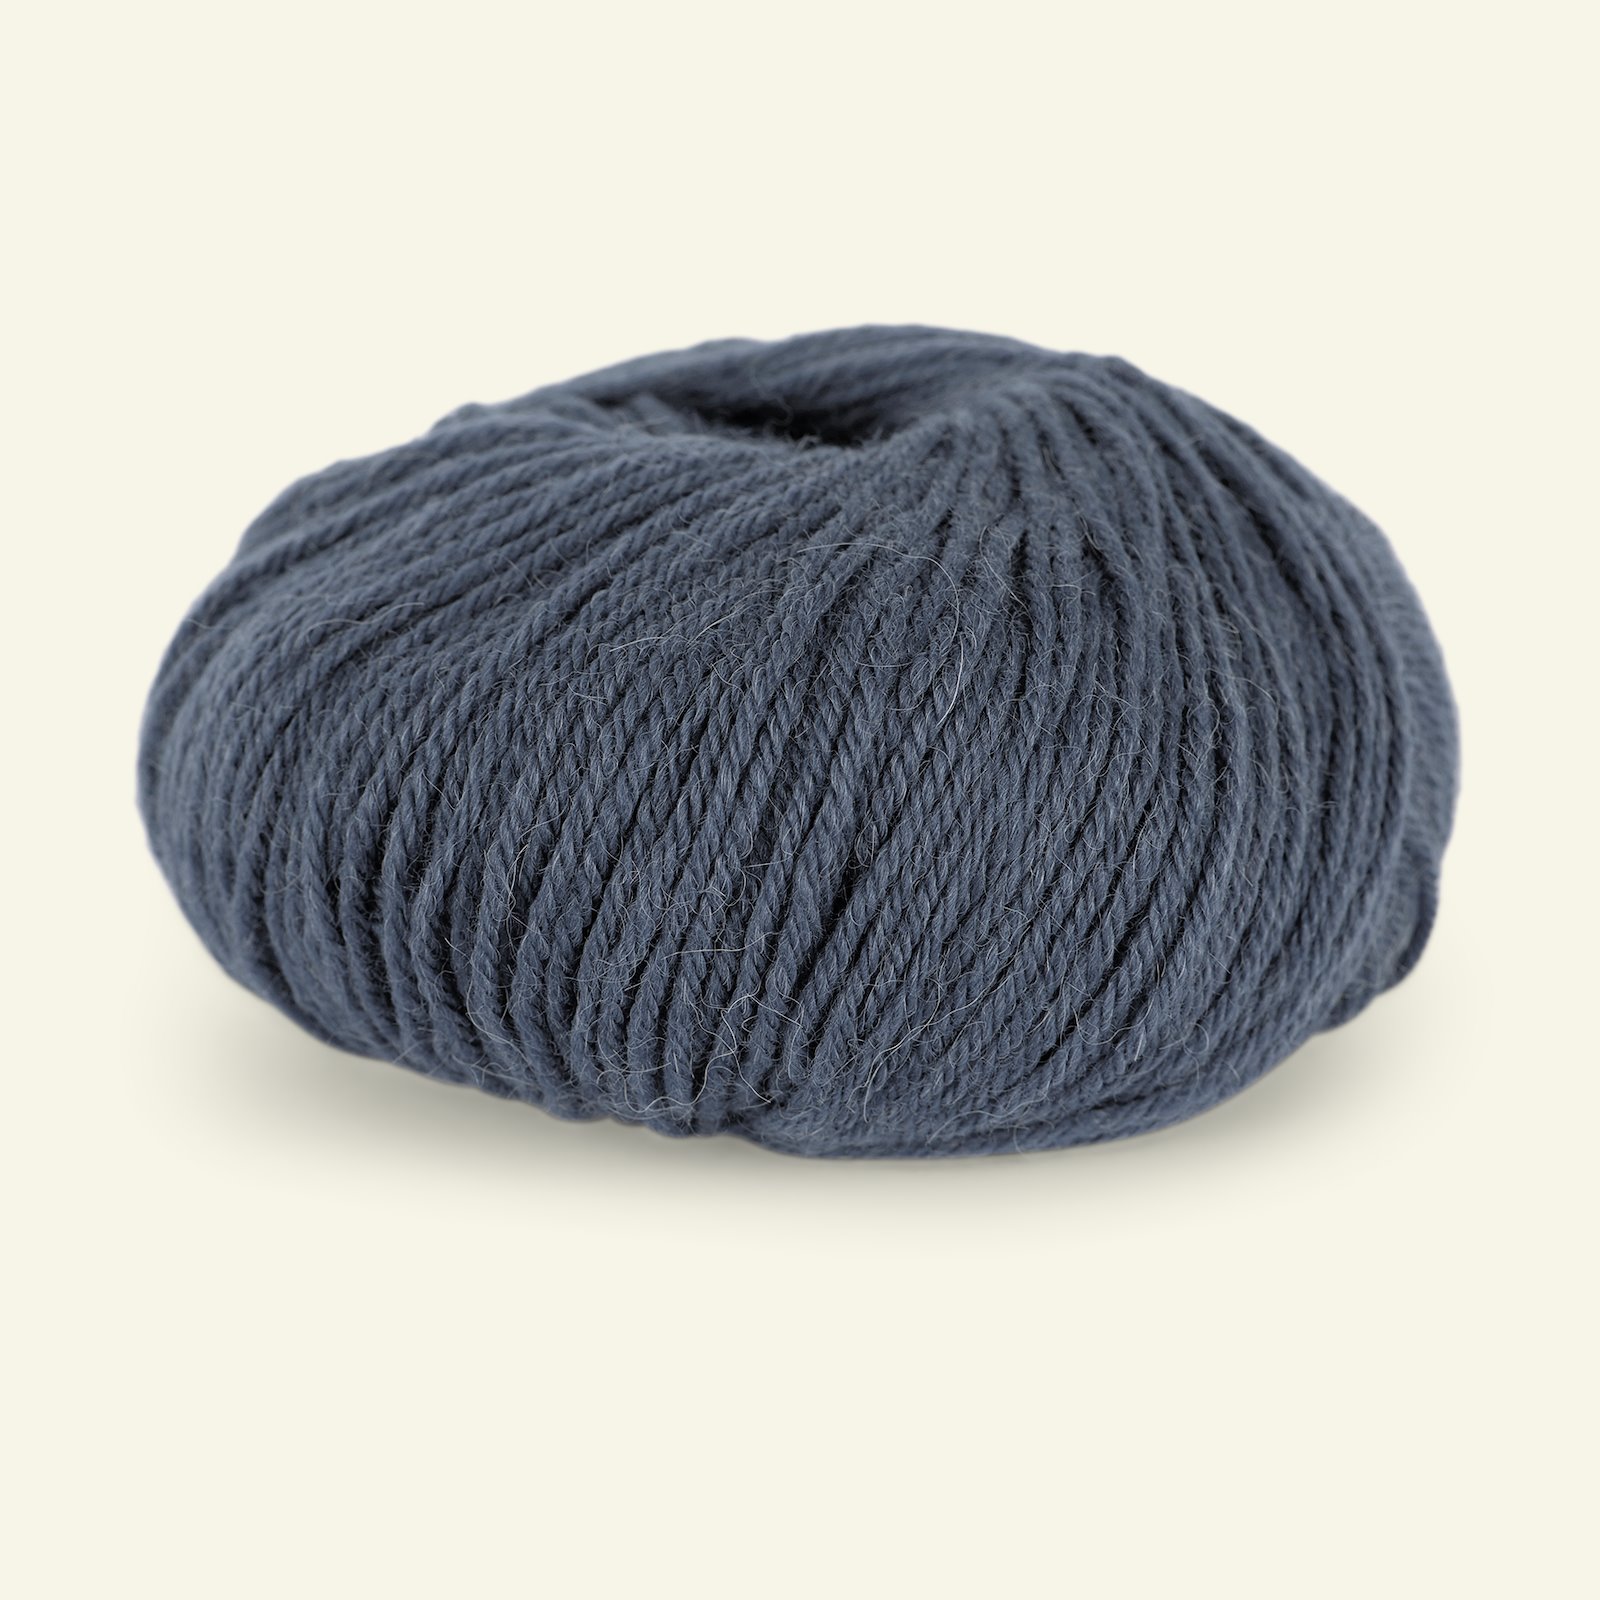 Du Store Alpakka, alpaca merino mixed yarn "Sterk", dark greyblue (861) 90000683_pack_b